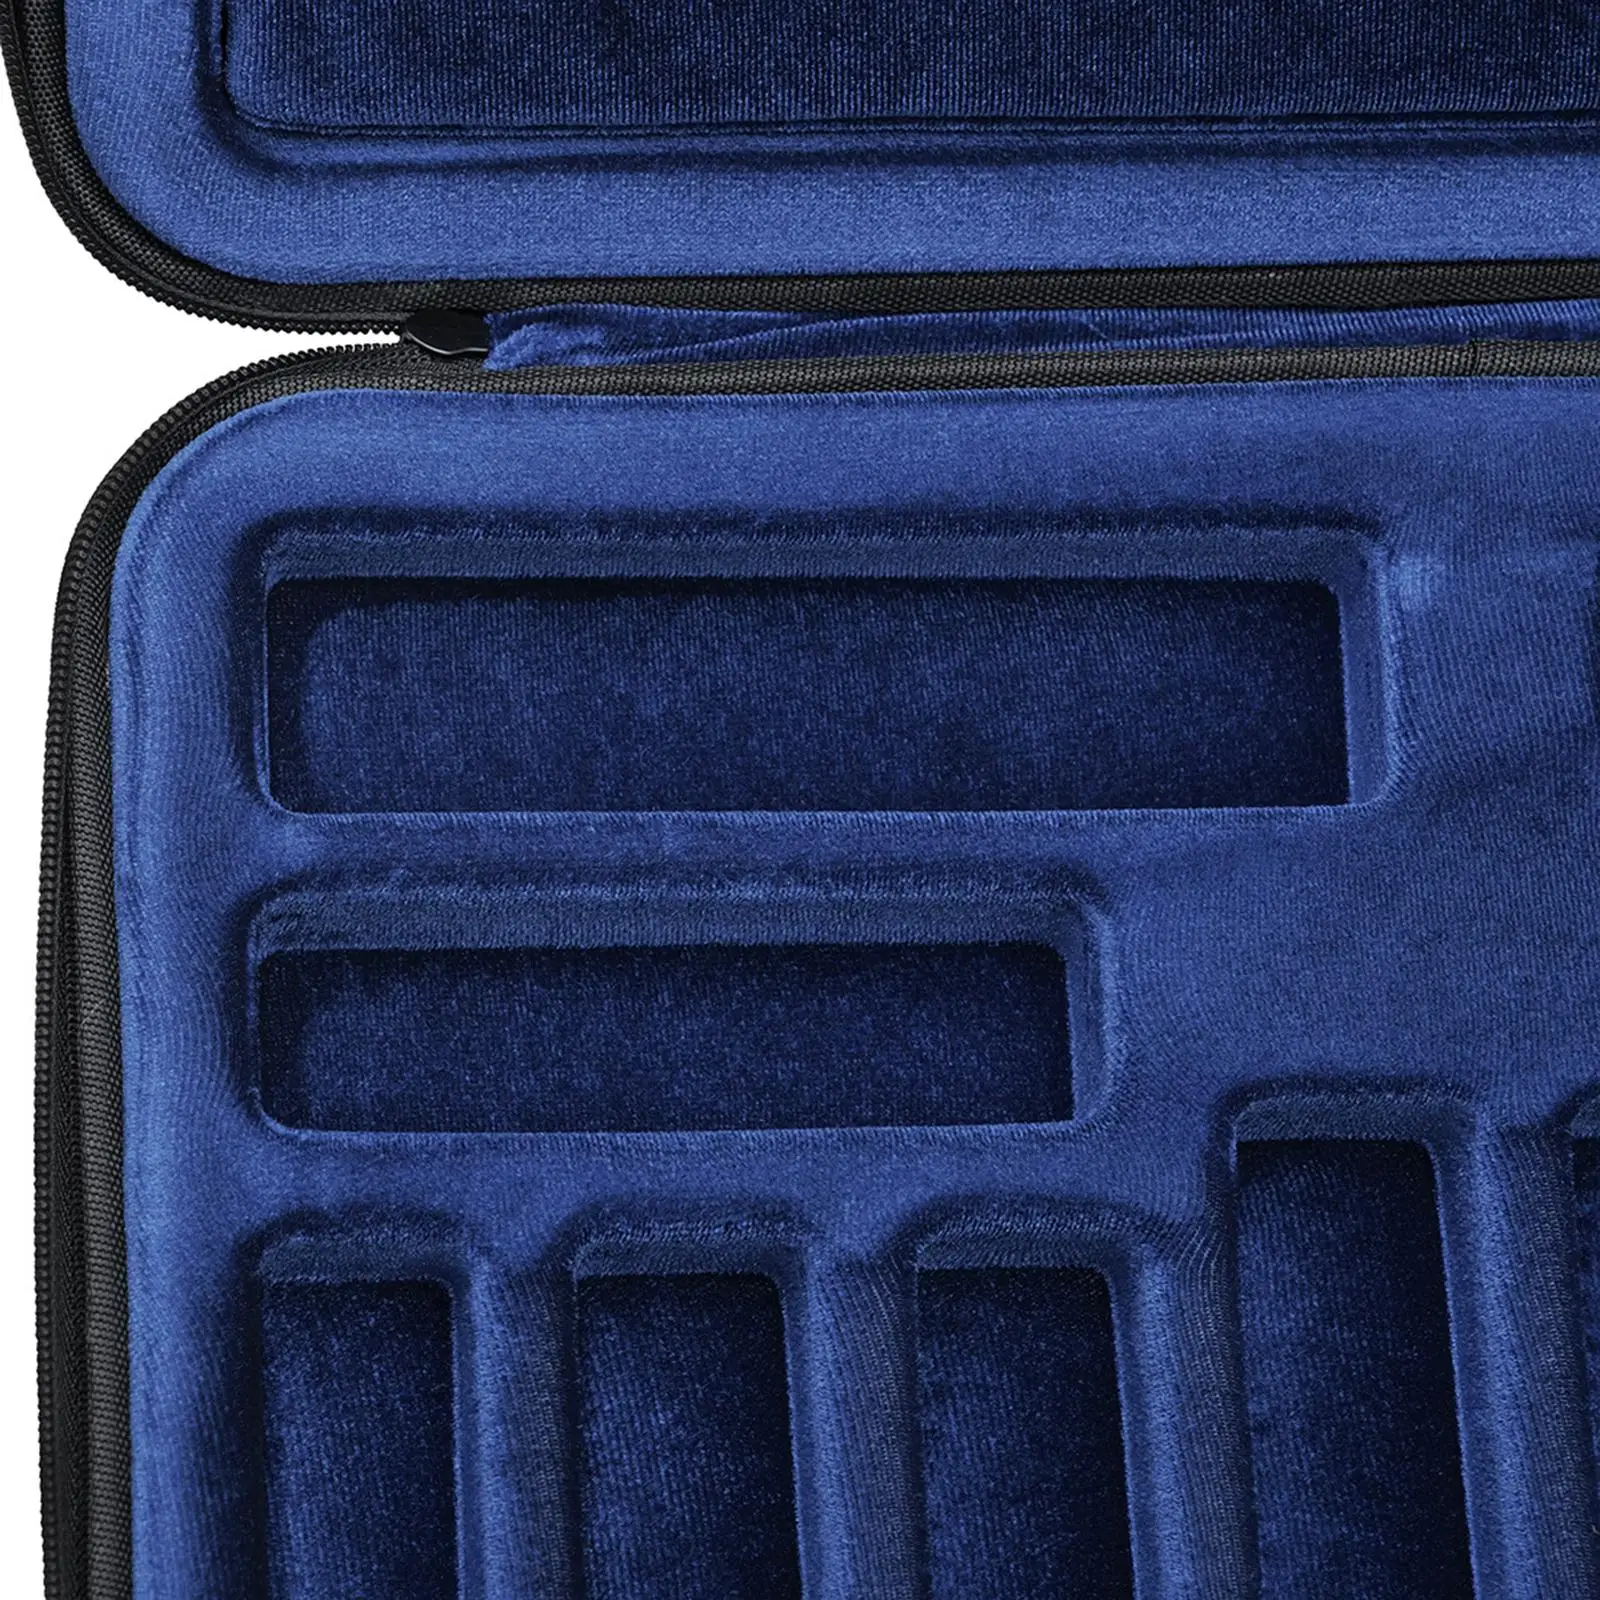 Saxphone Mouthpiece Case Zipper Closure Portable 12 Piece Hard Case Woodwind